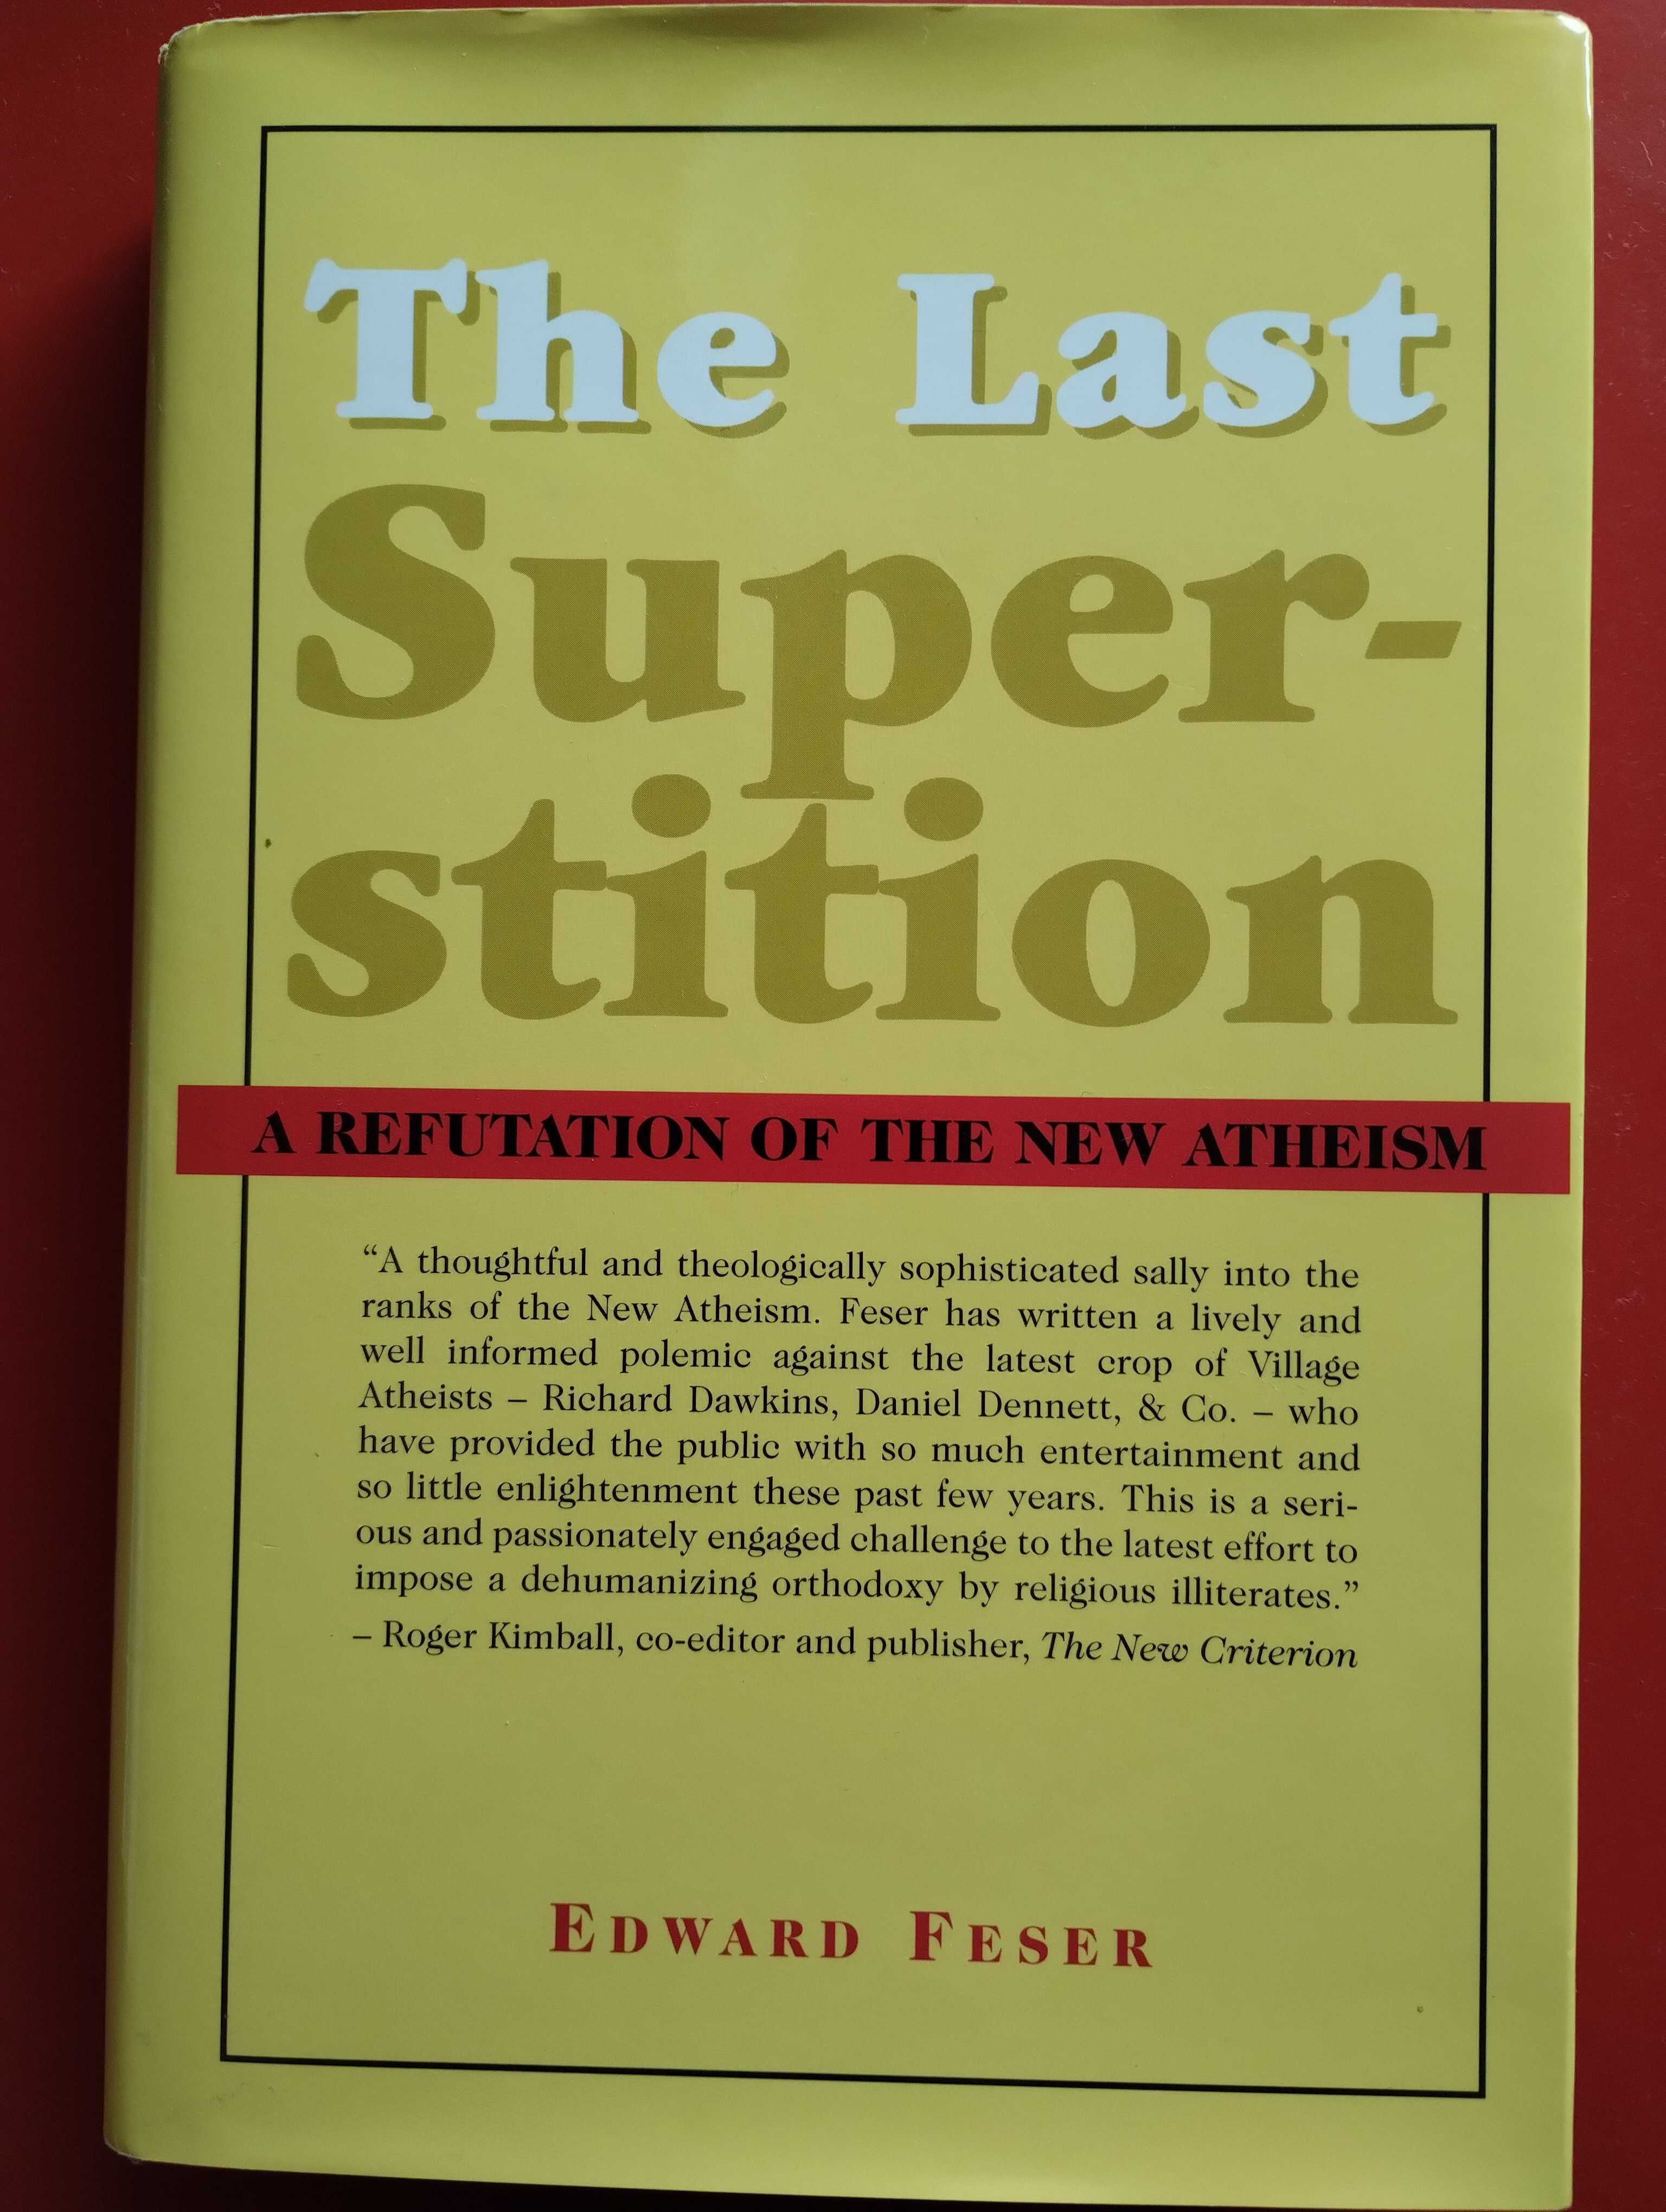 Edward Feser, The Last Superstition